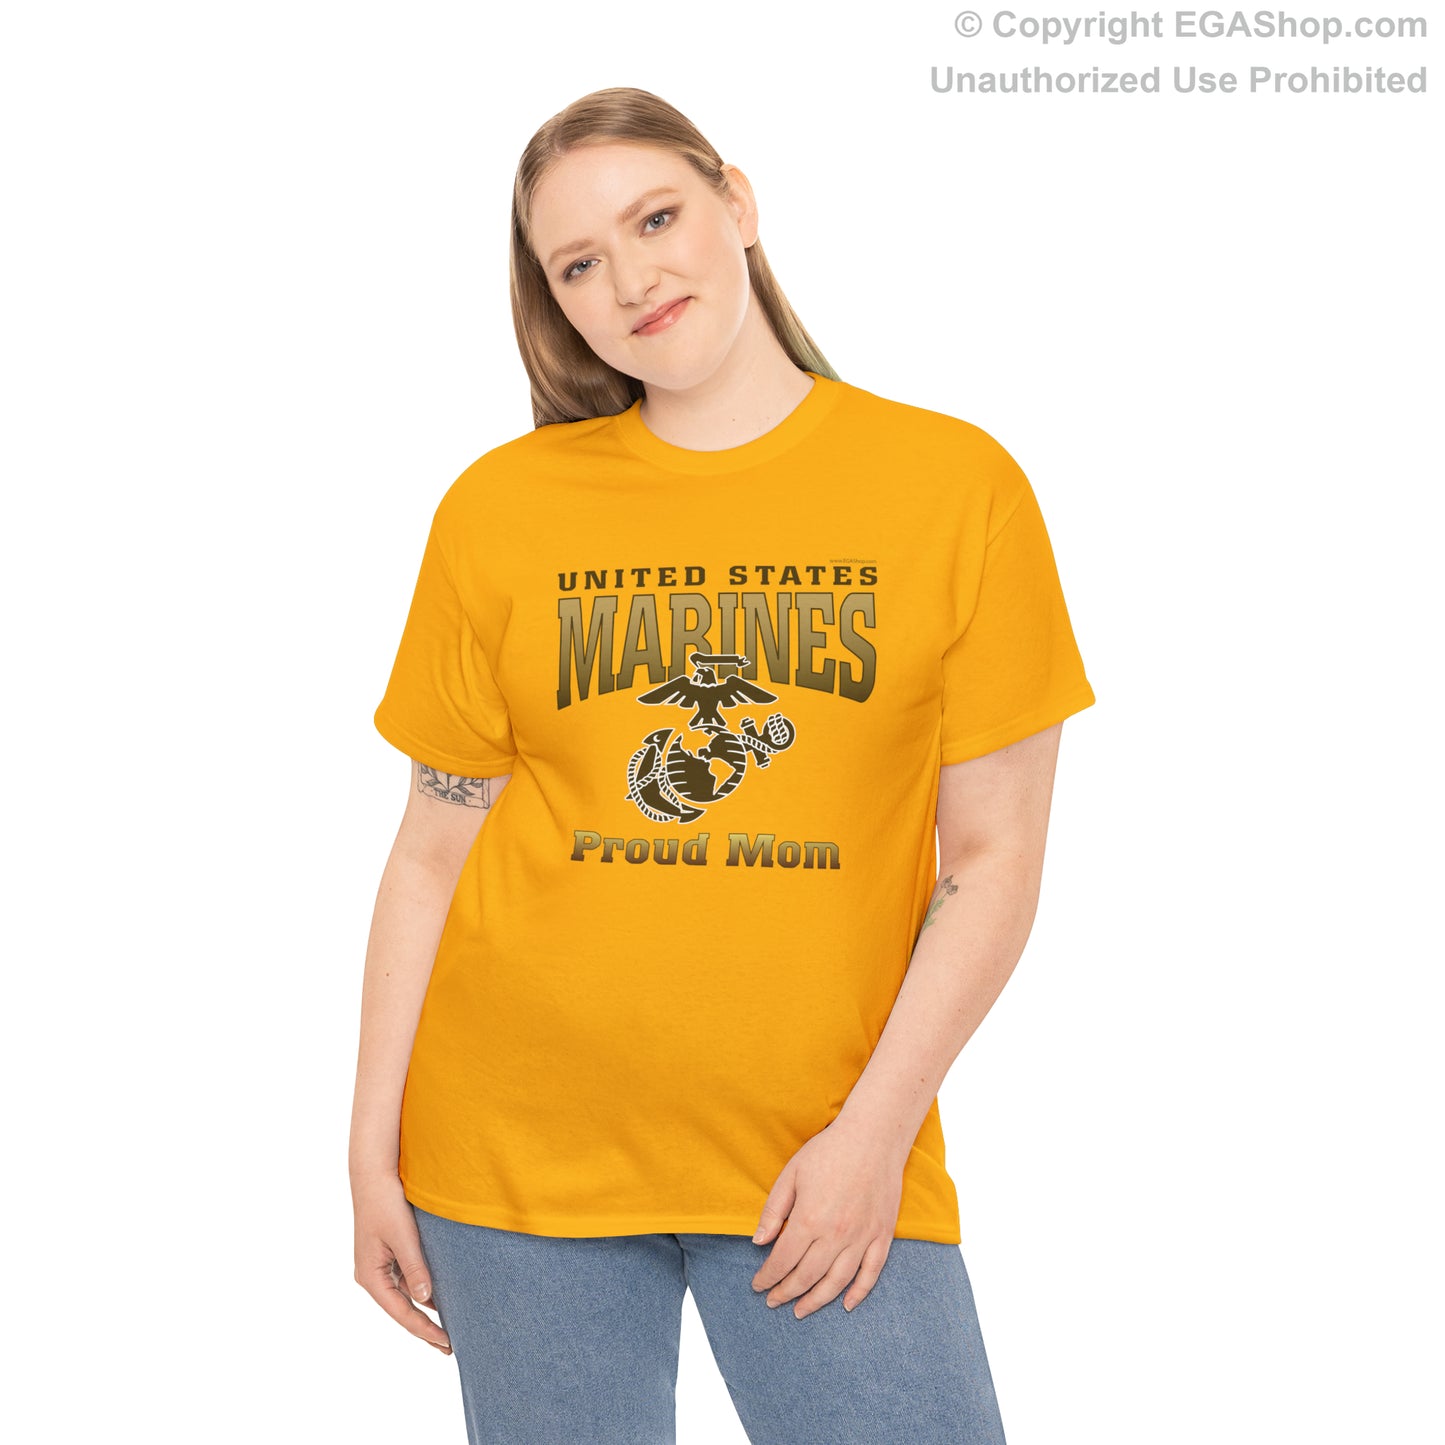 T-Shirt: United States Marines Proud Mom